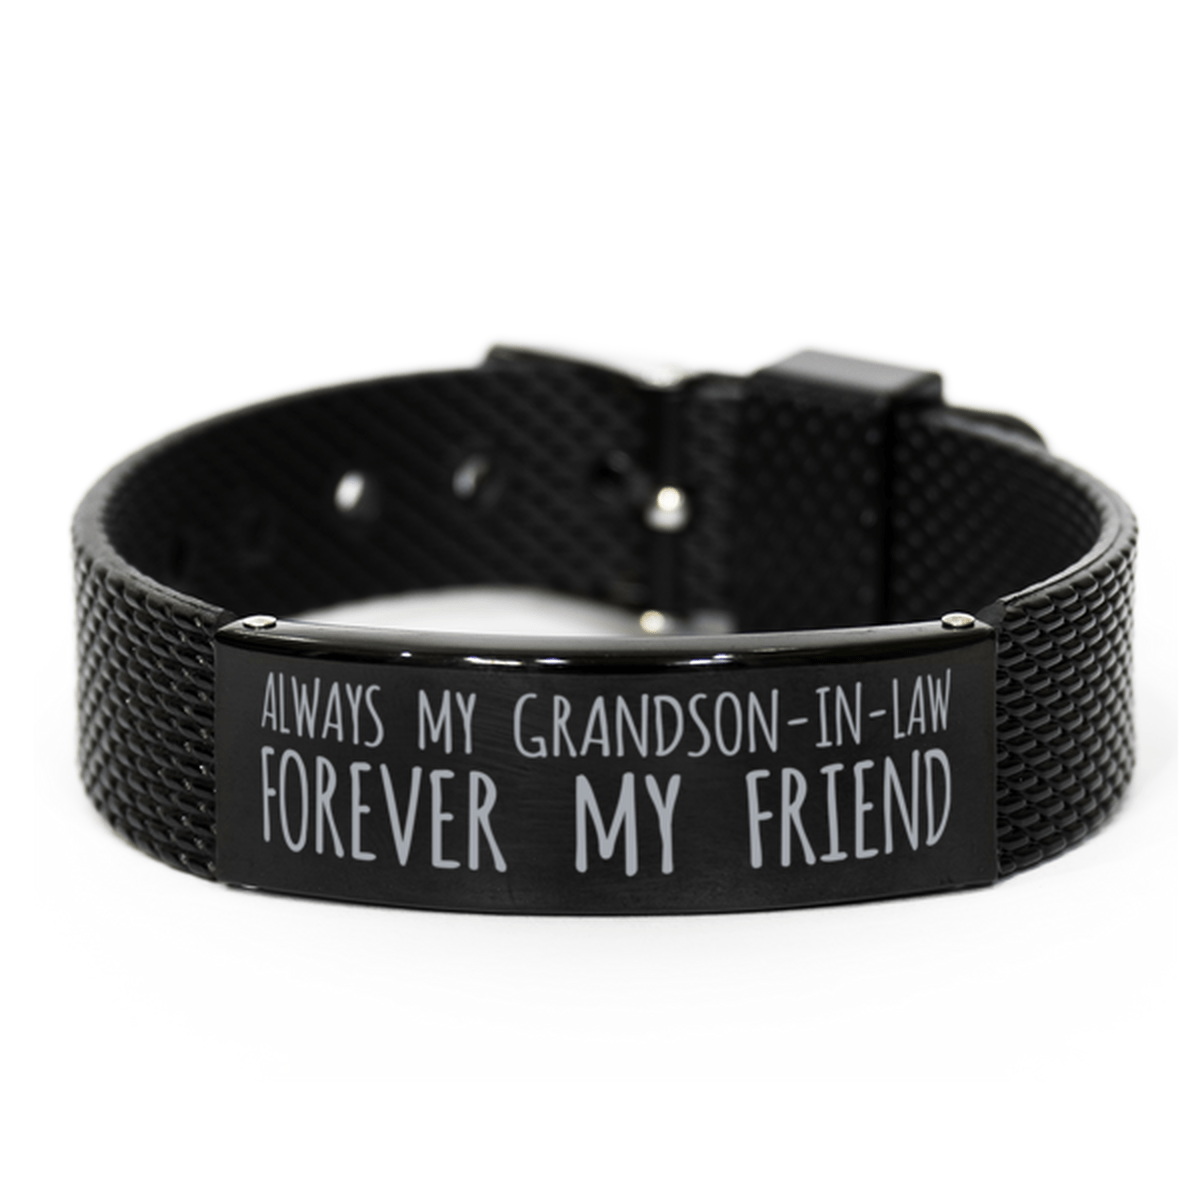 Inspirational Grandson-In-Law Black Shark Mesh Bracelet, Always My Grandson-In-Law Forever My Friend, Best Birthday Gifts for Family Friends